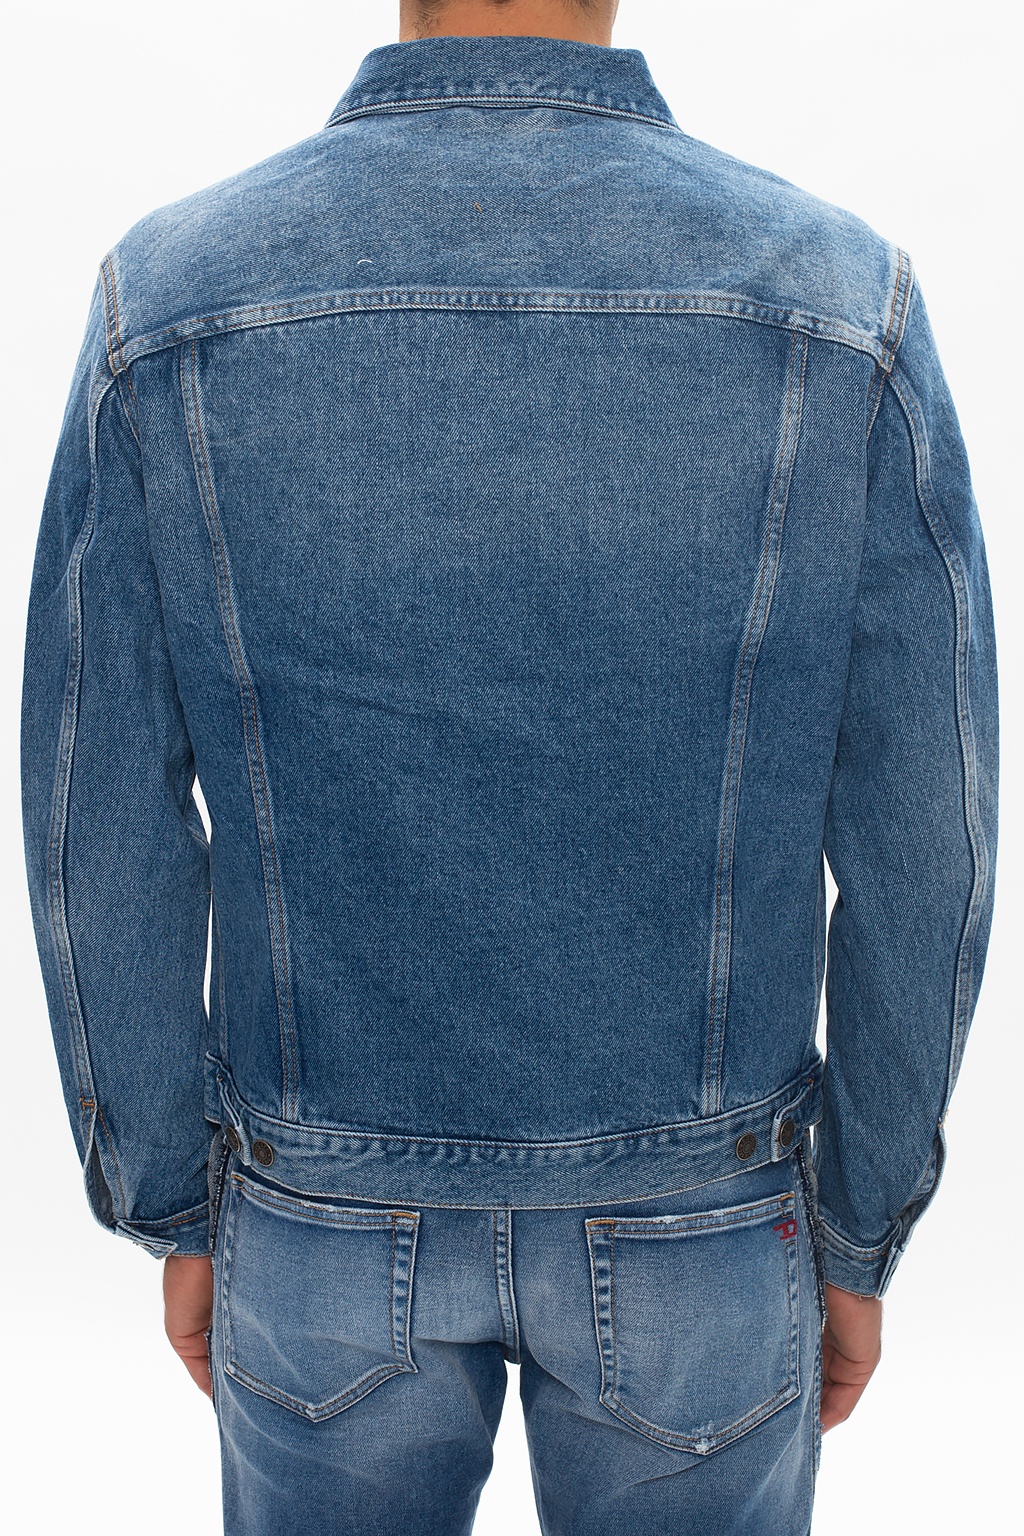 Diesel Denim jacket with logo | Men's Clothing | Vitkac